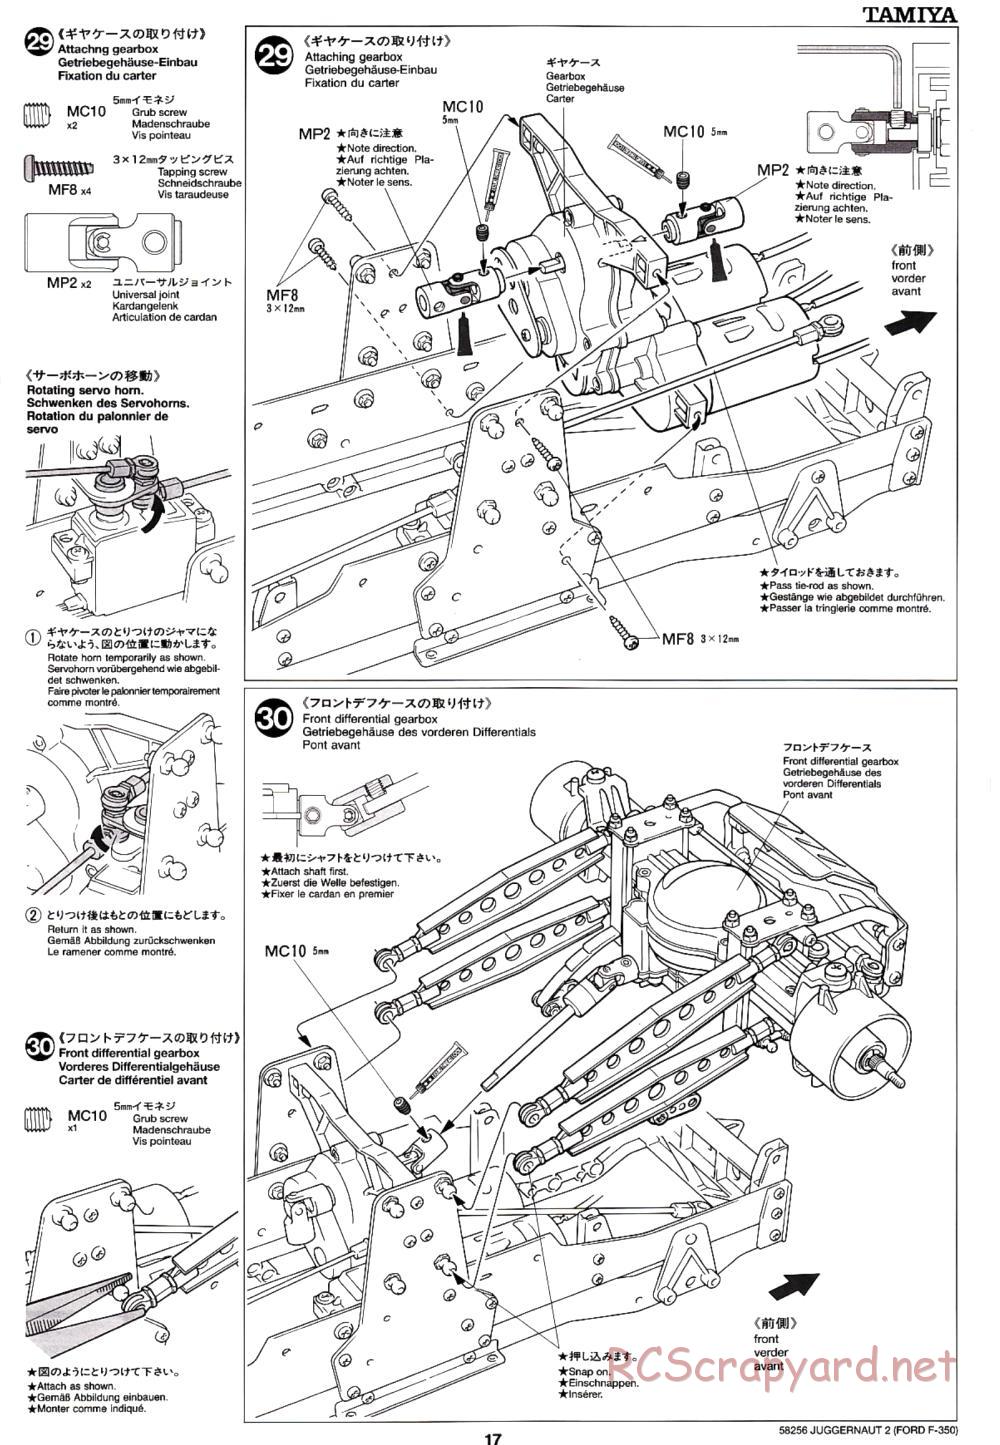 Tamiya - Juggernaut 2 Chassis - Manual - Page 17